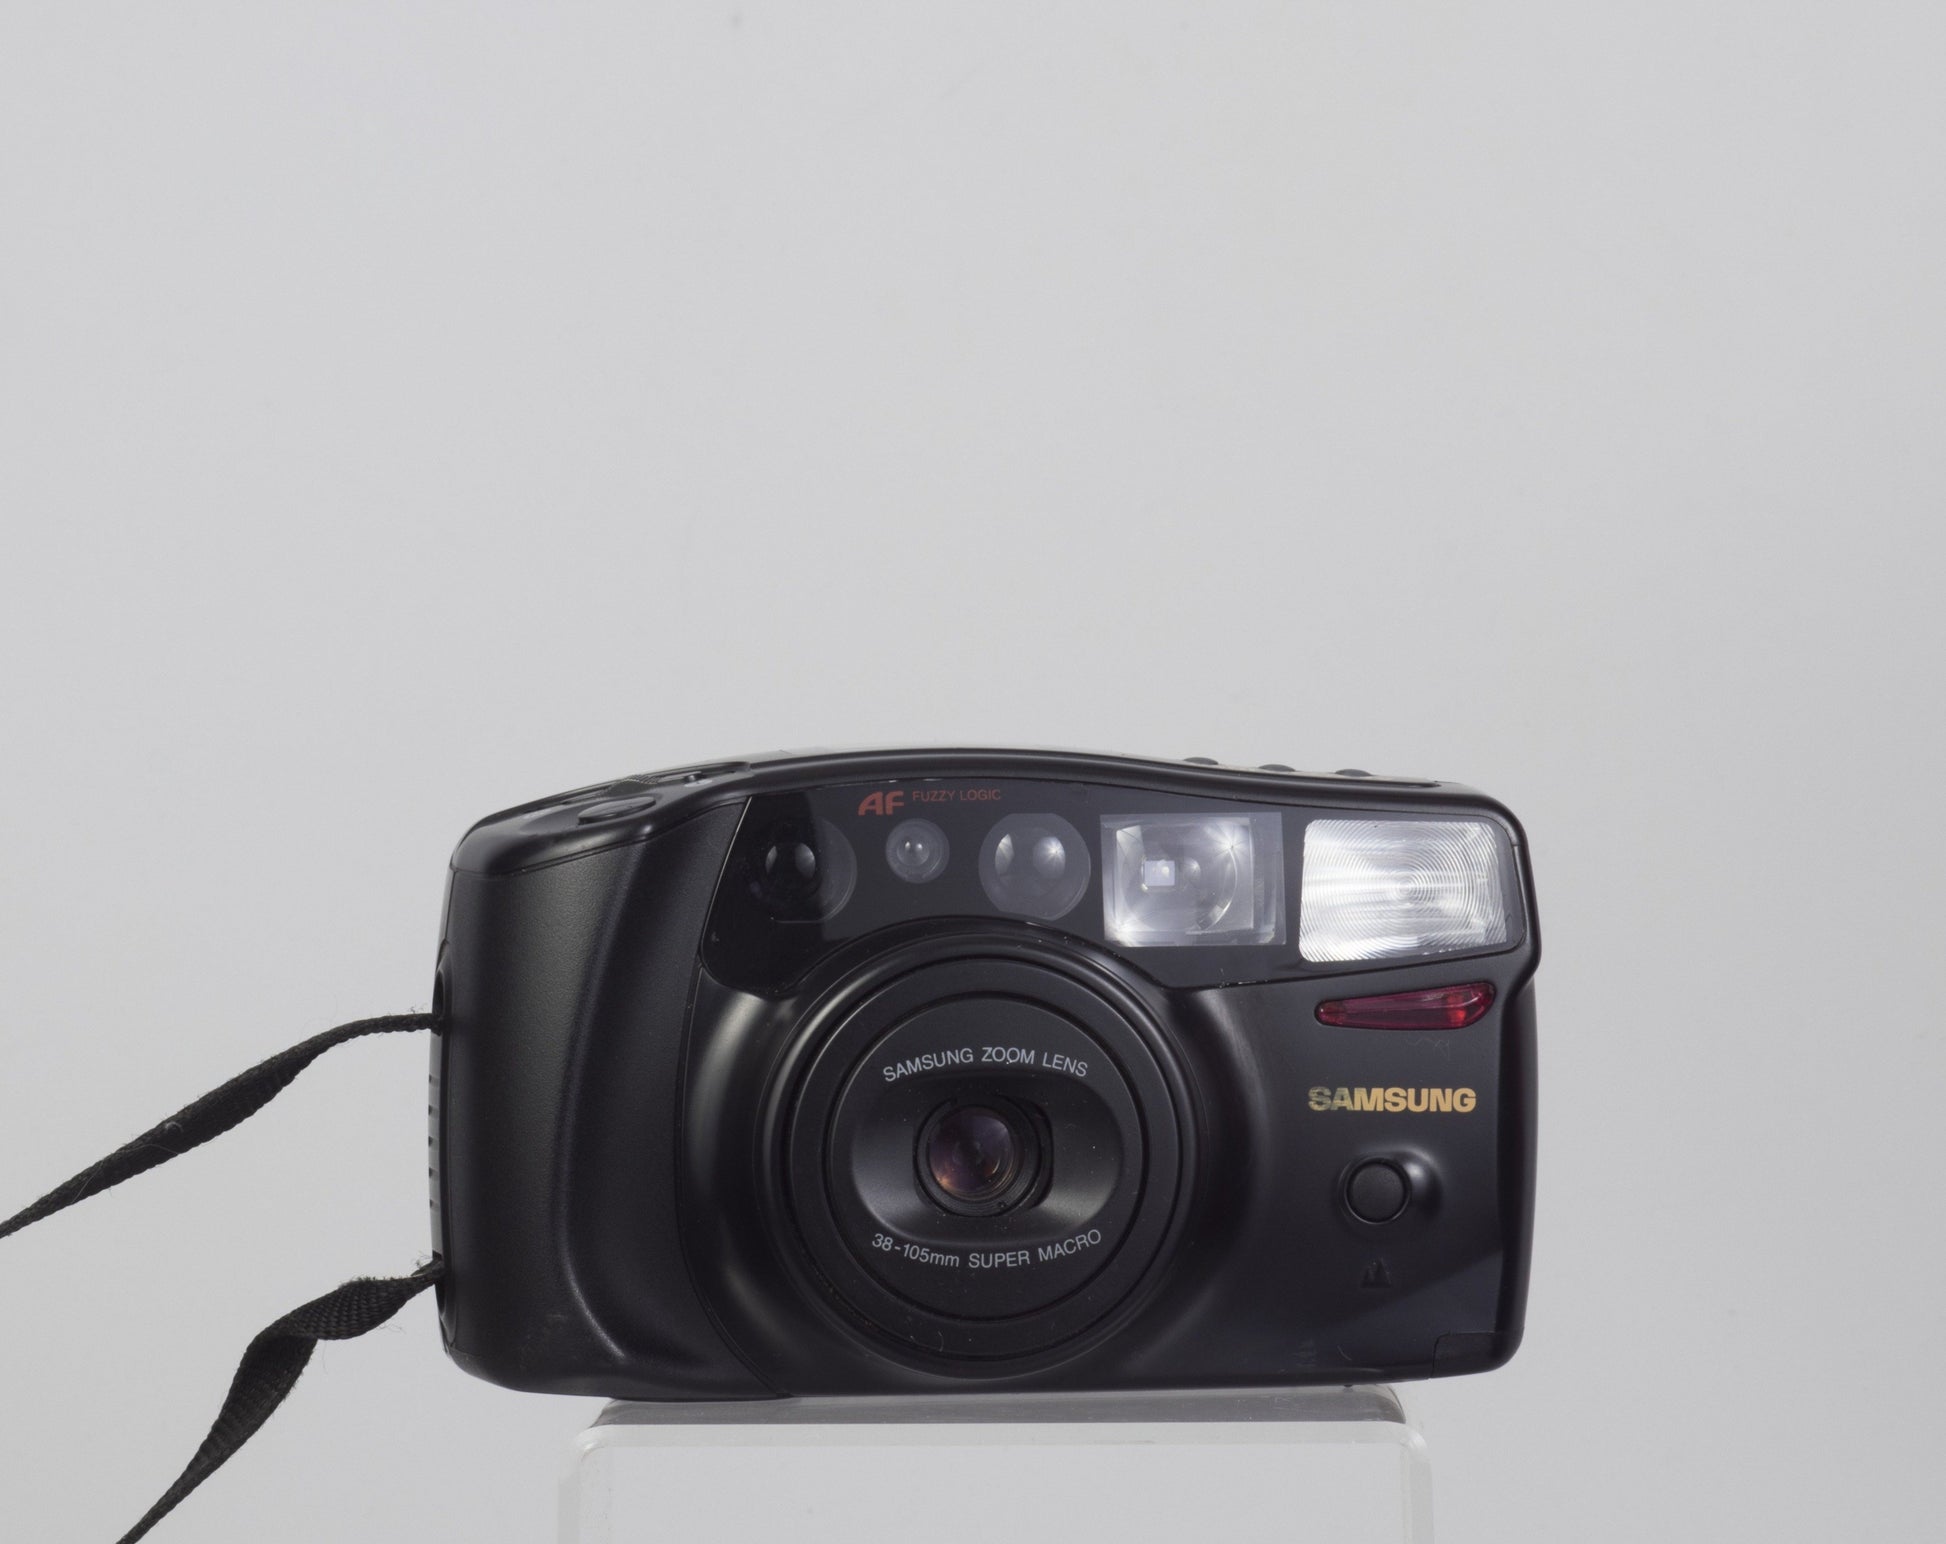 Samsung AF Zoom 1050 35mm film point-and-shoot camera